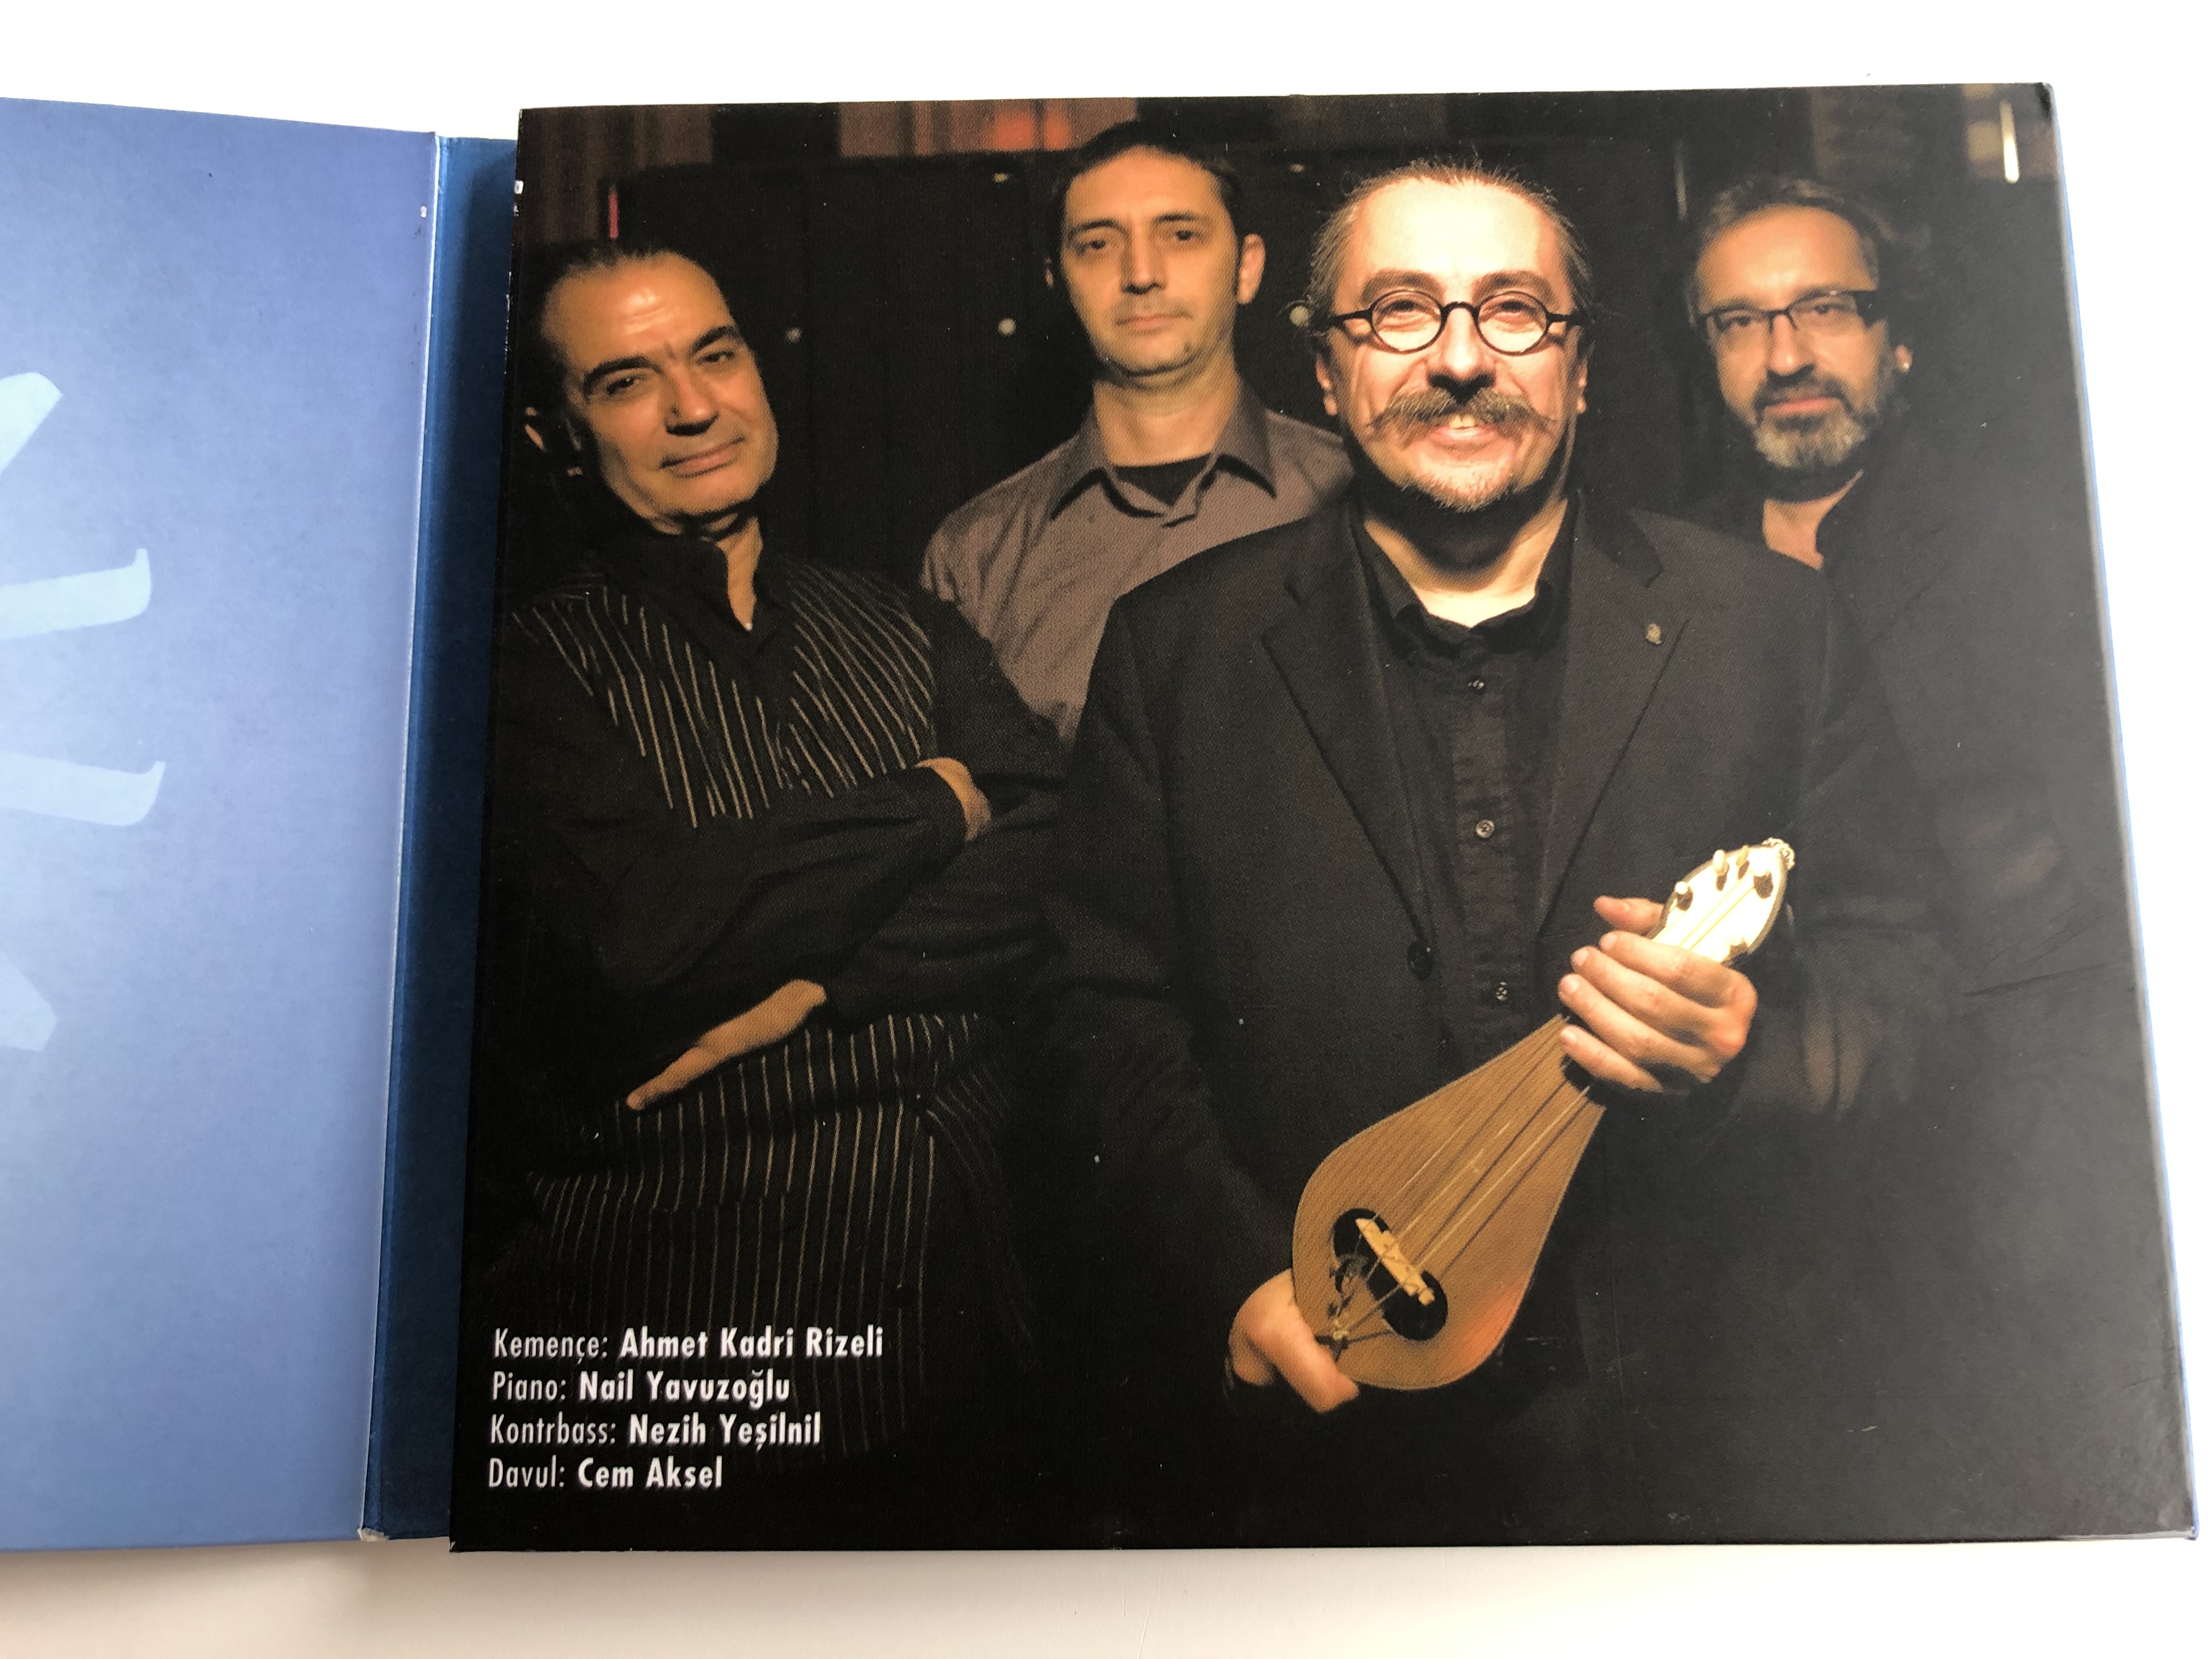 jazz-alla-turca-ahmet-kadri-rizeli-modal-jazz-trio-turkish-cd-2008-2-.jpg